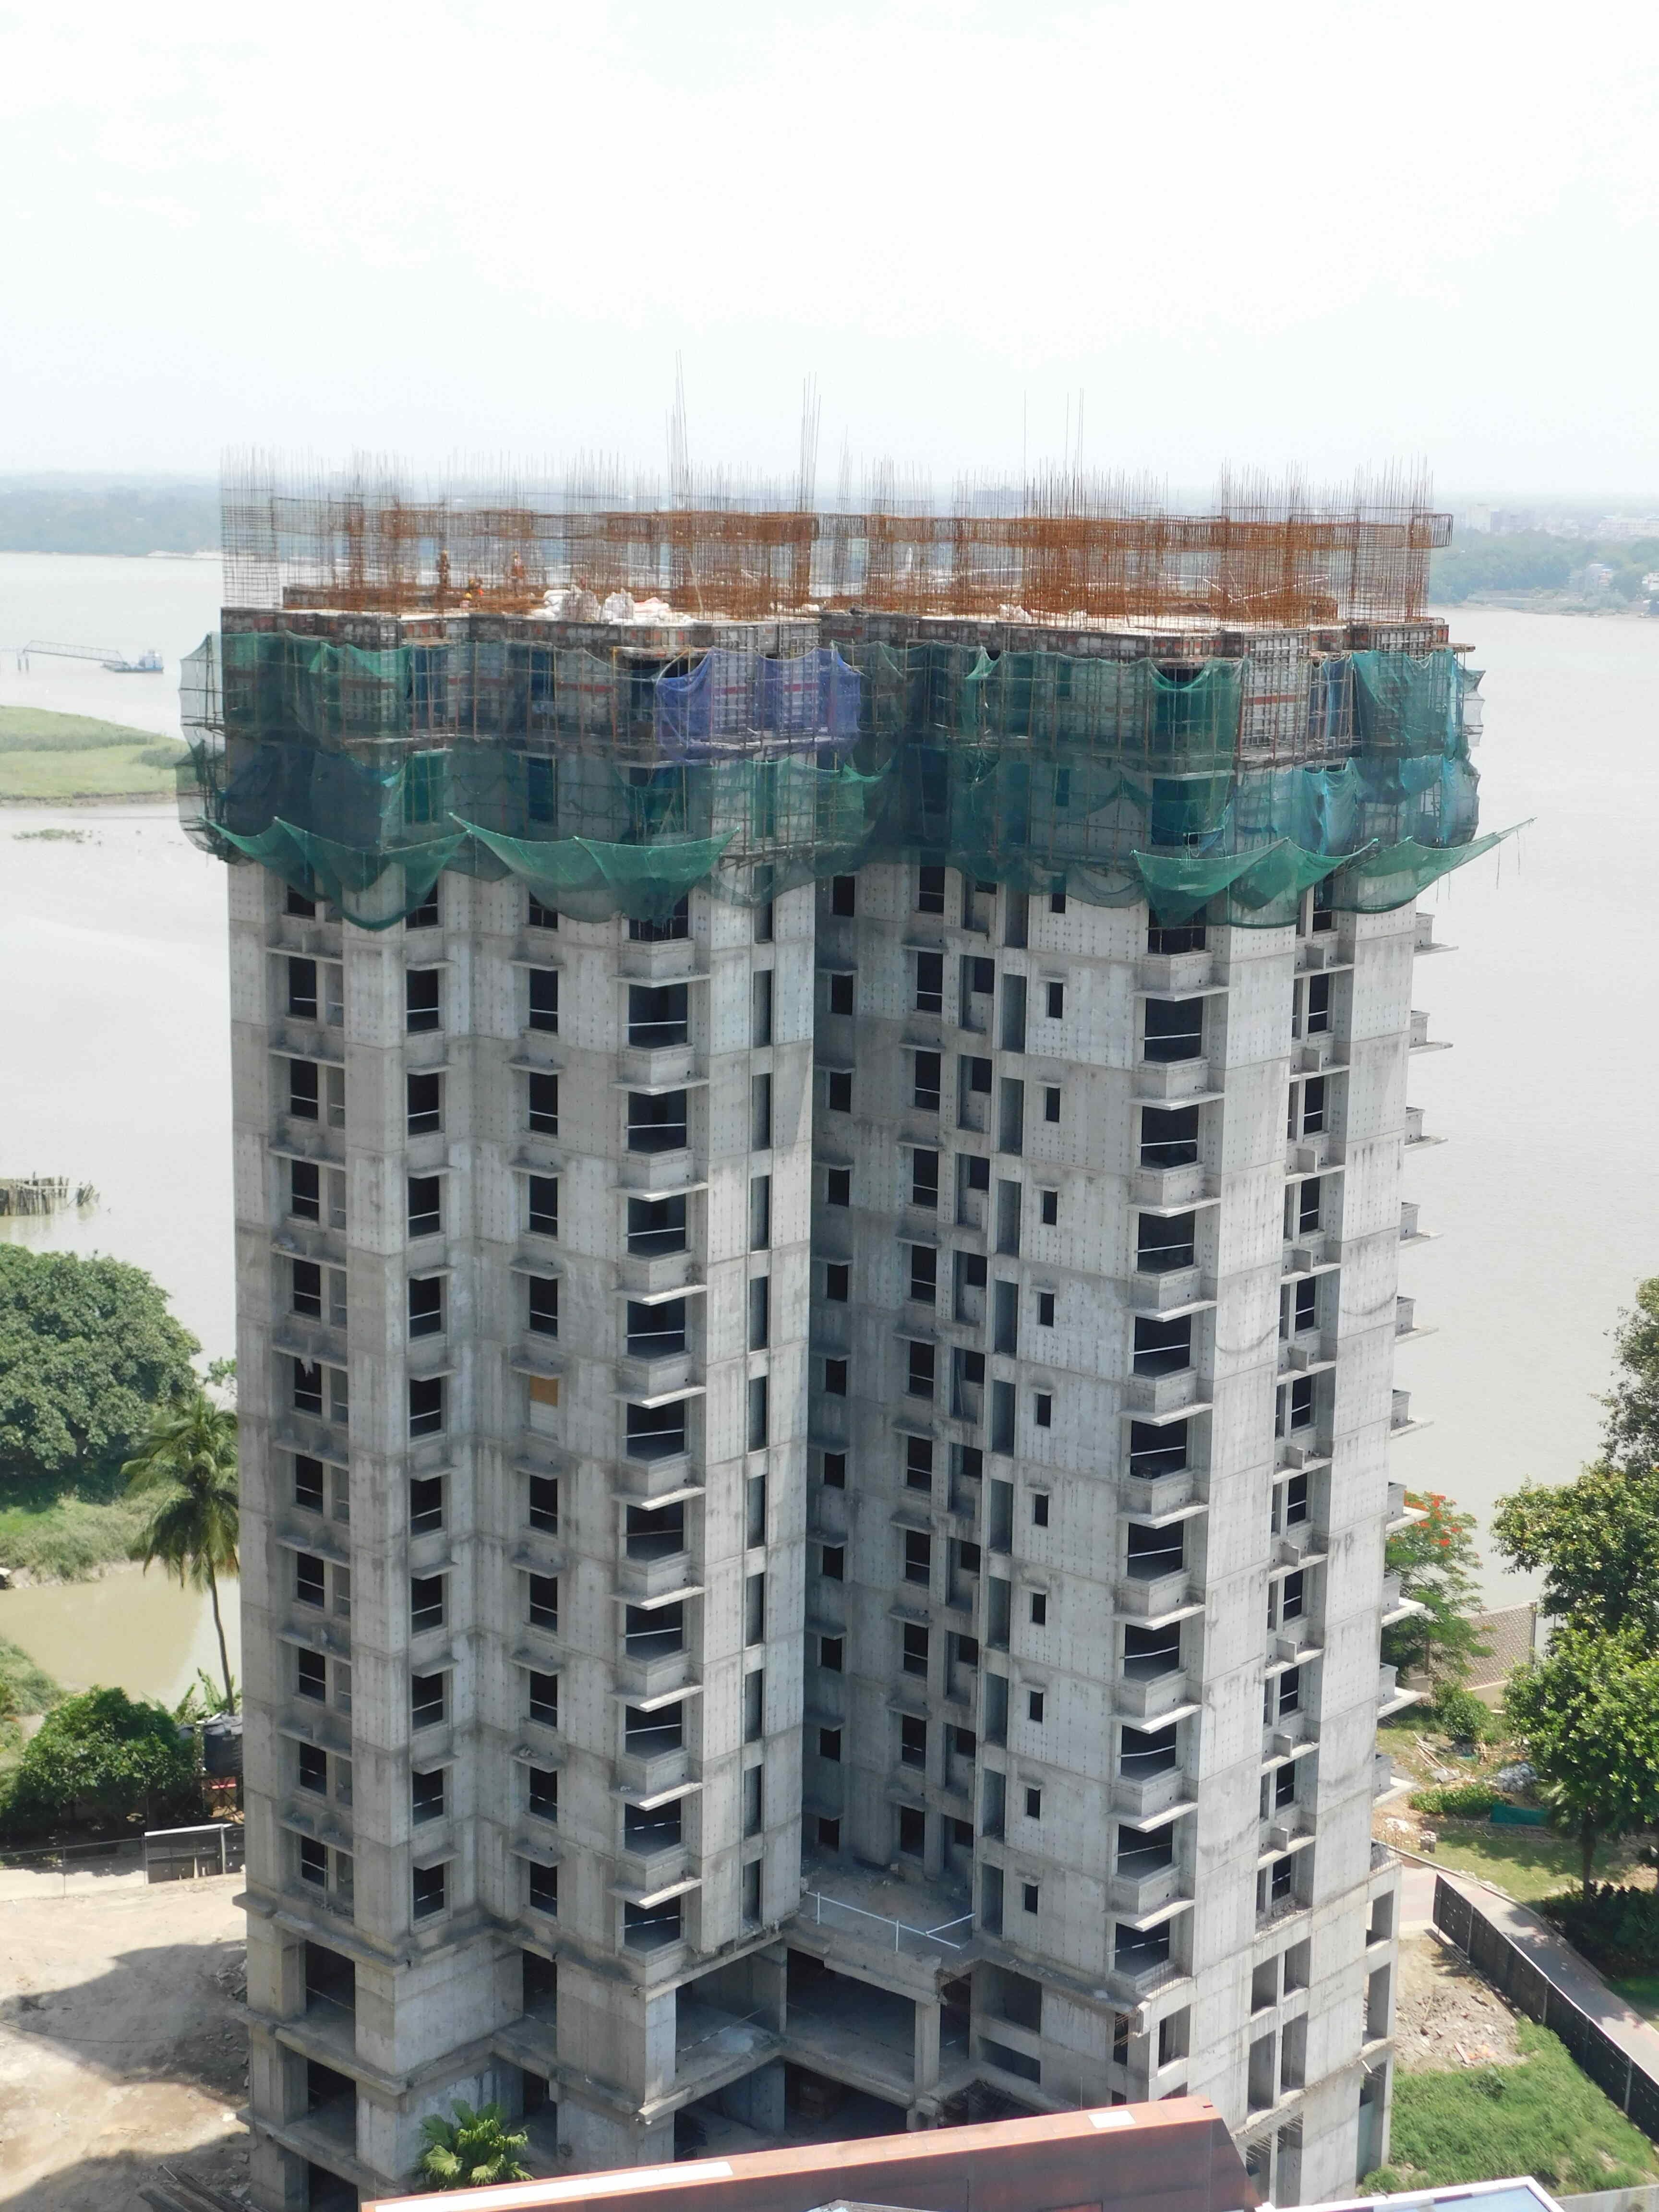 Sangam Tower 1 14th Floor Roof Casting work in progress